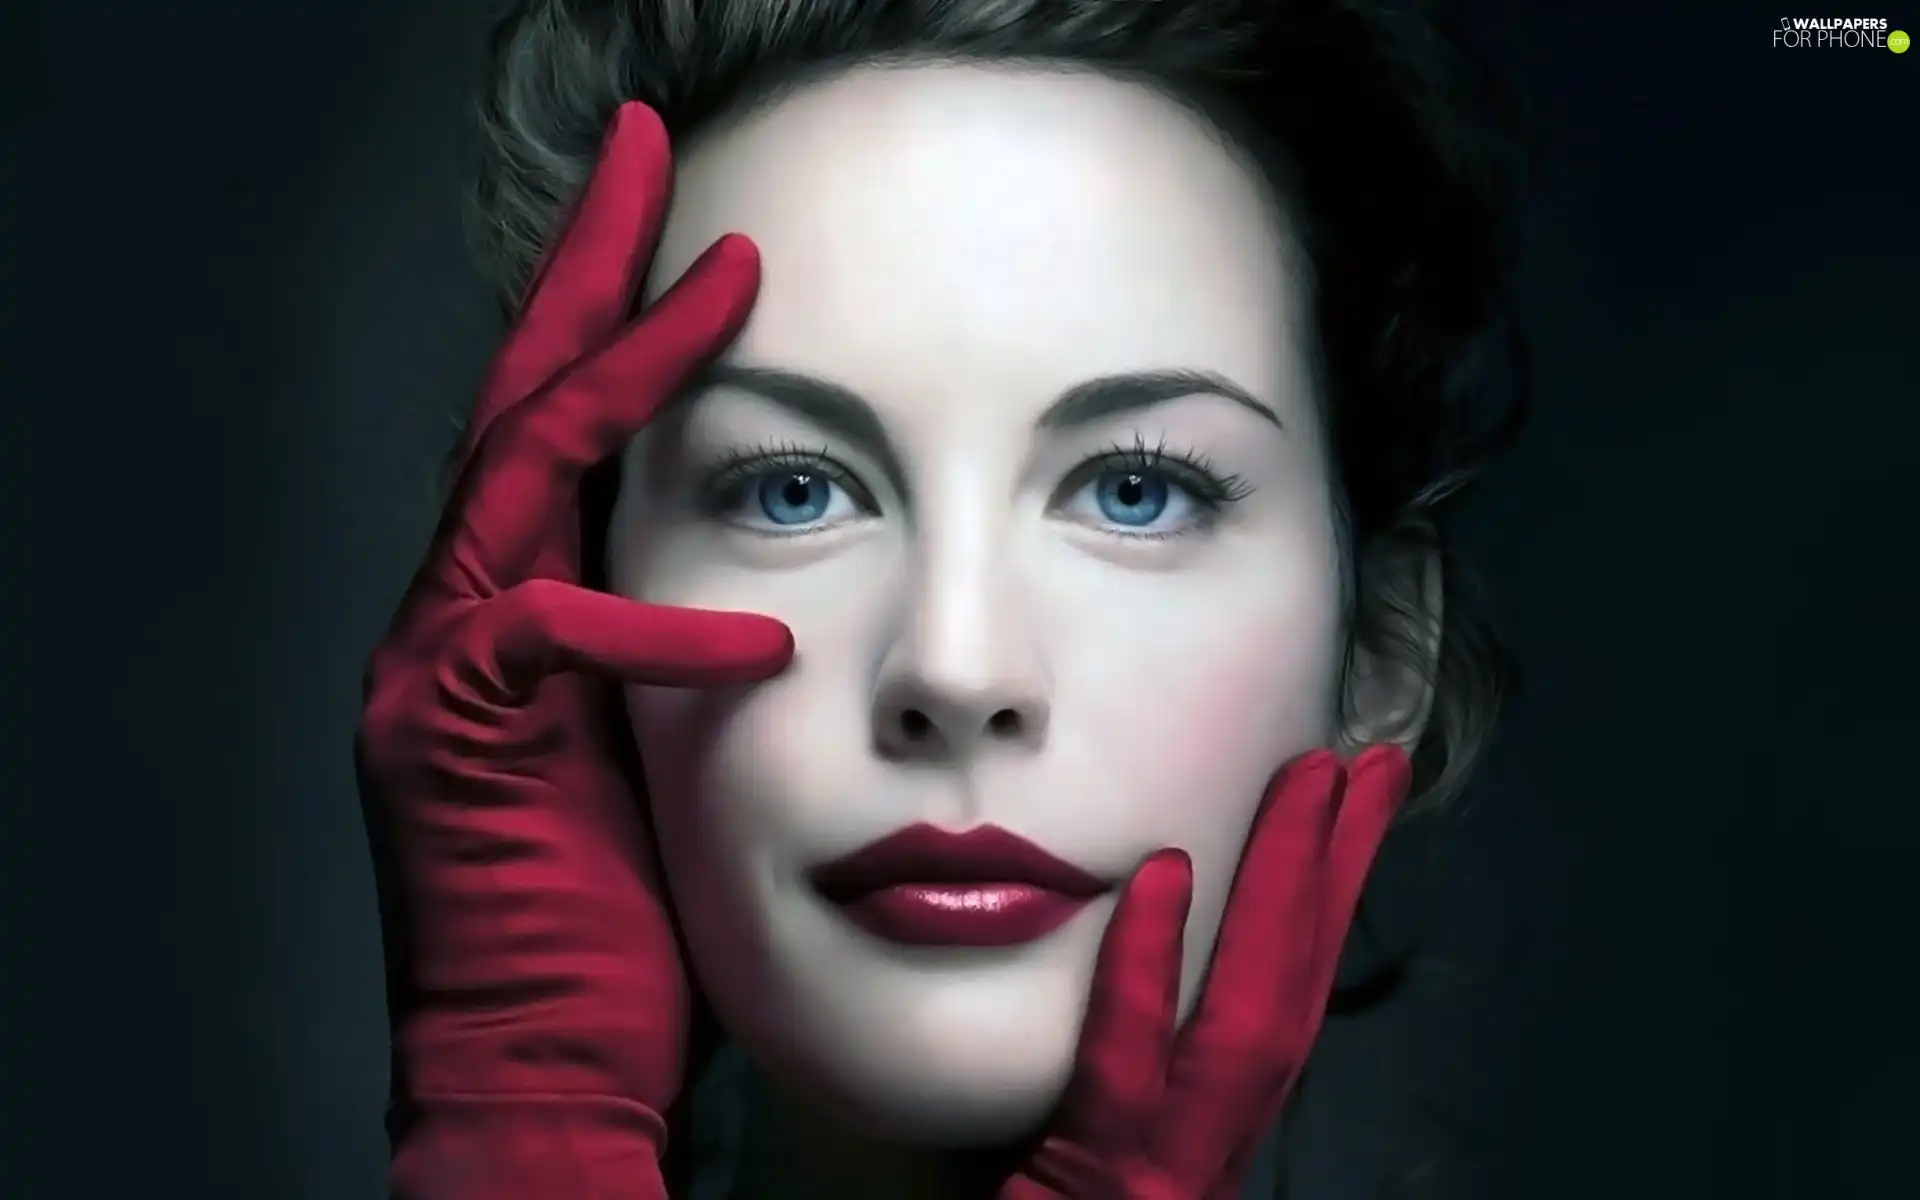 Women, Gloves, Liv Tyler, make-up